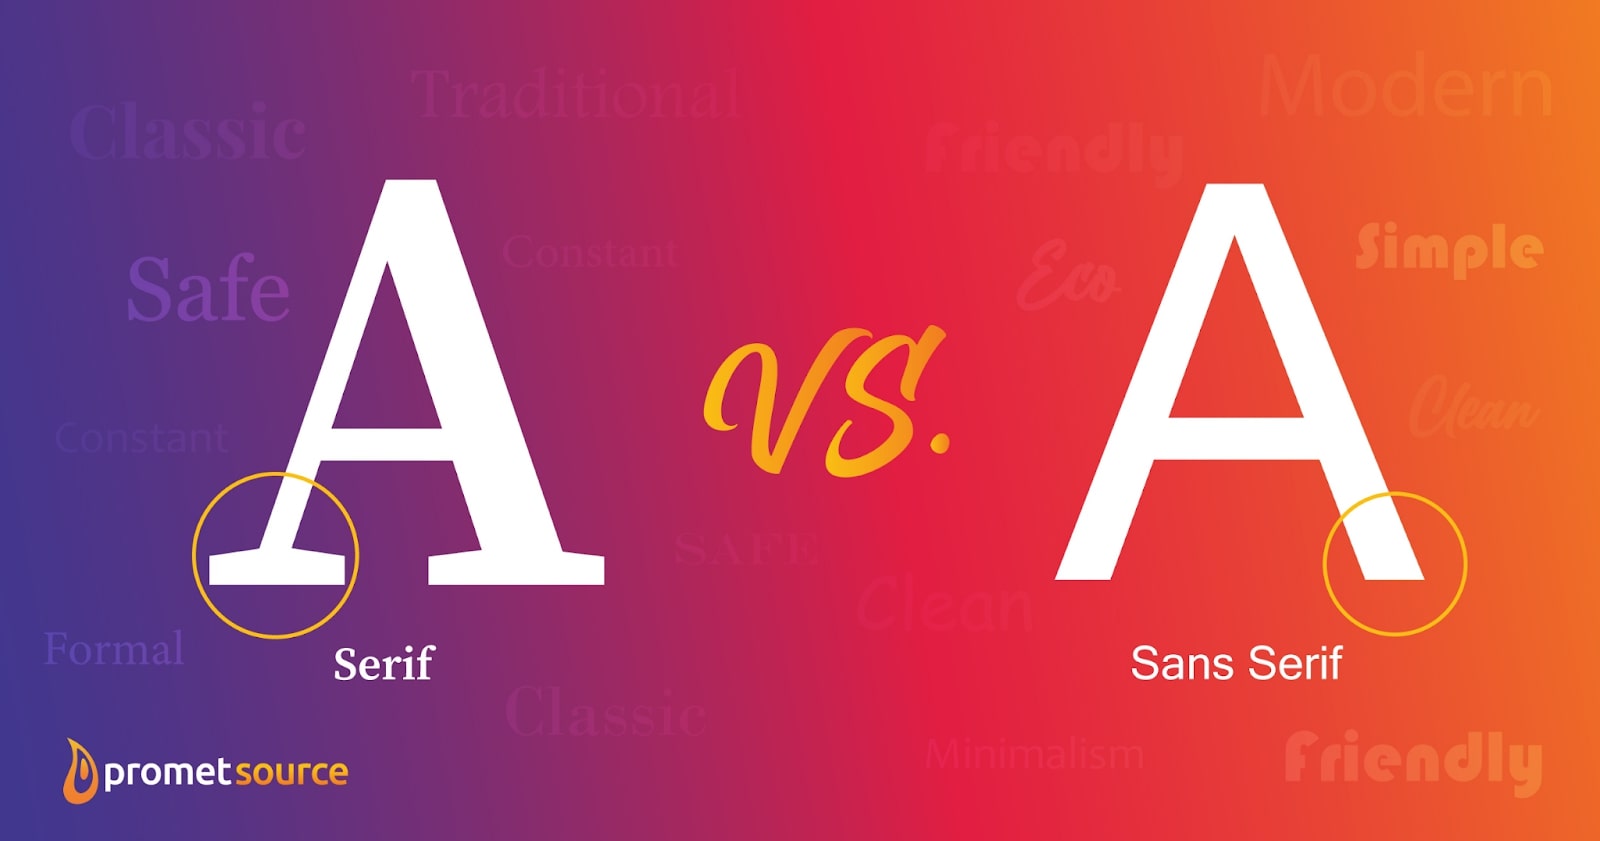 Example of Serif vs. sans serif fonts